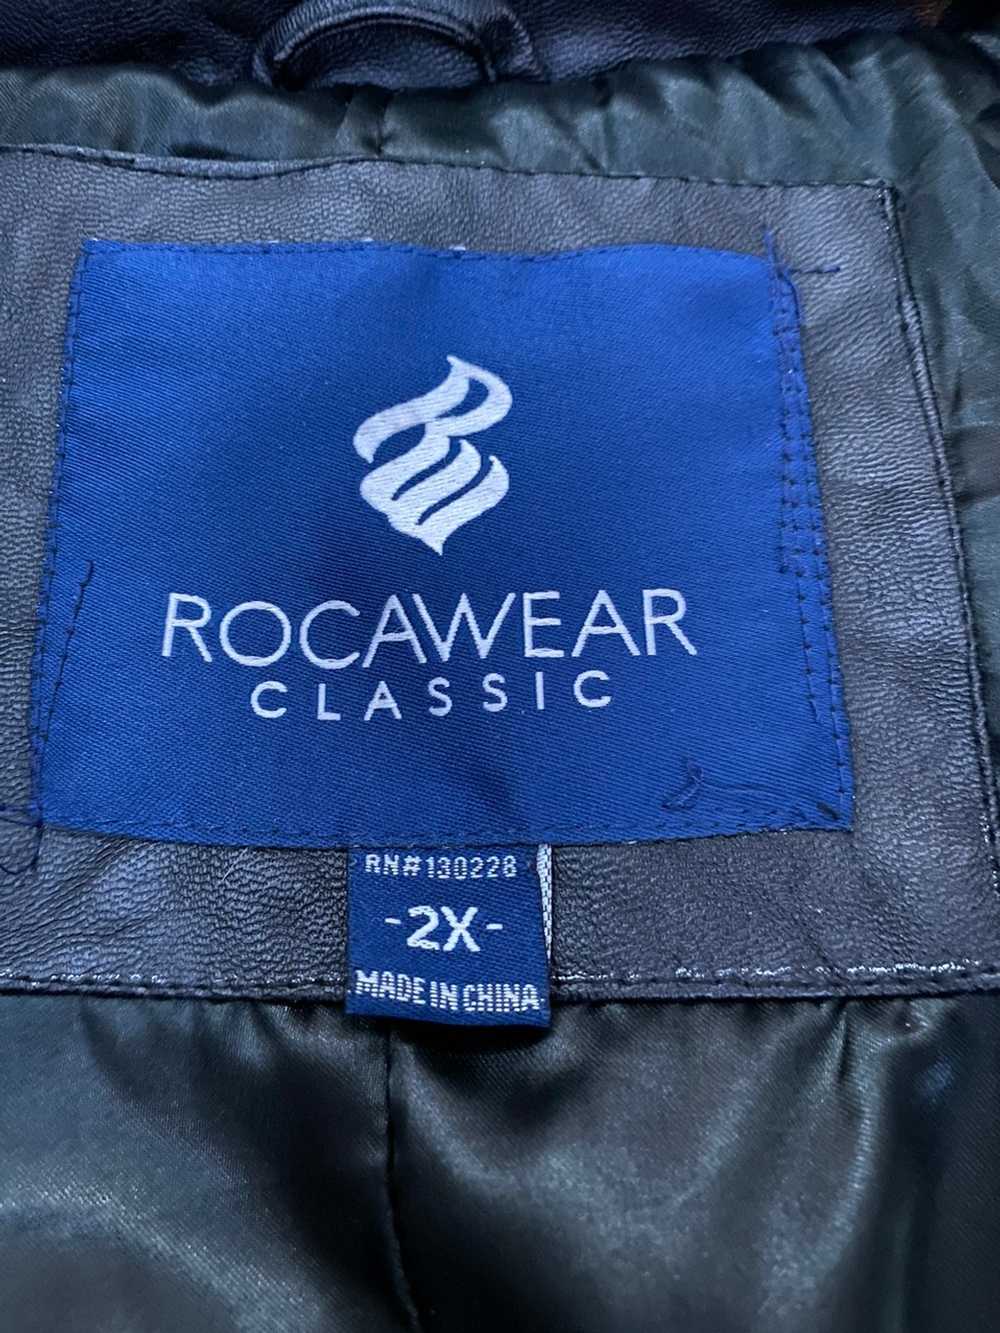 Rocawear Big black rocawear coat - image 2